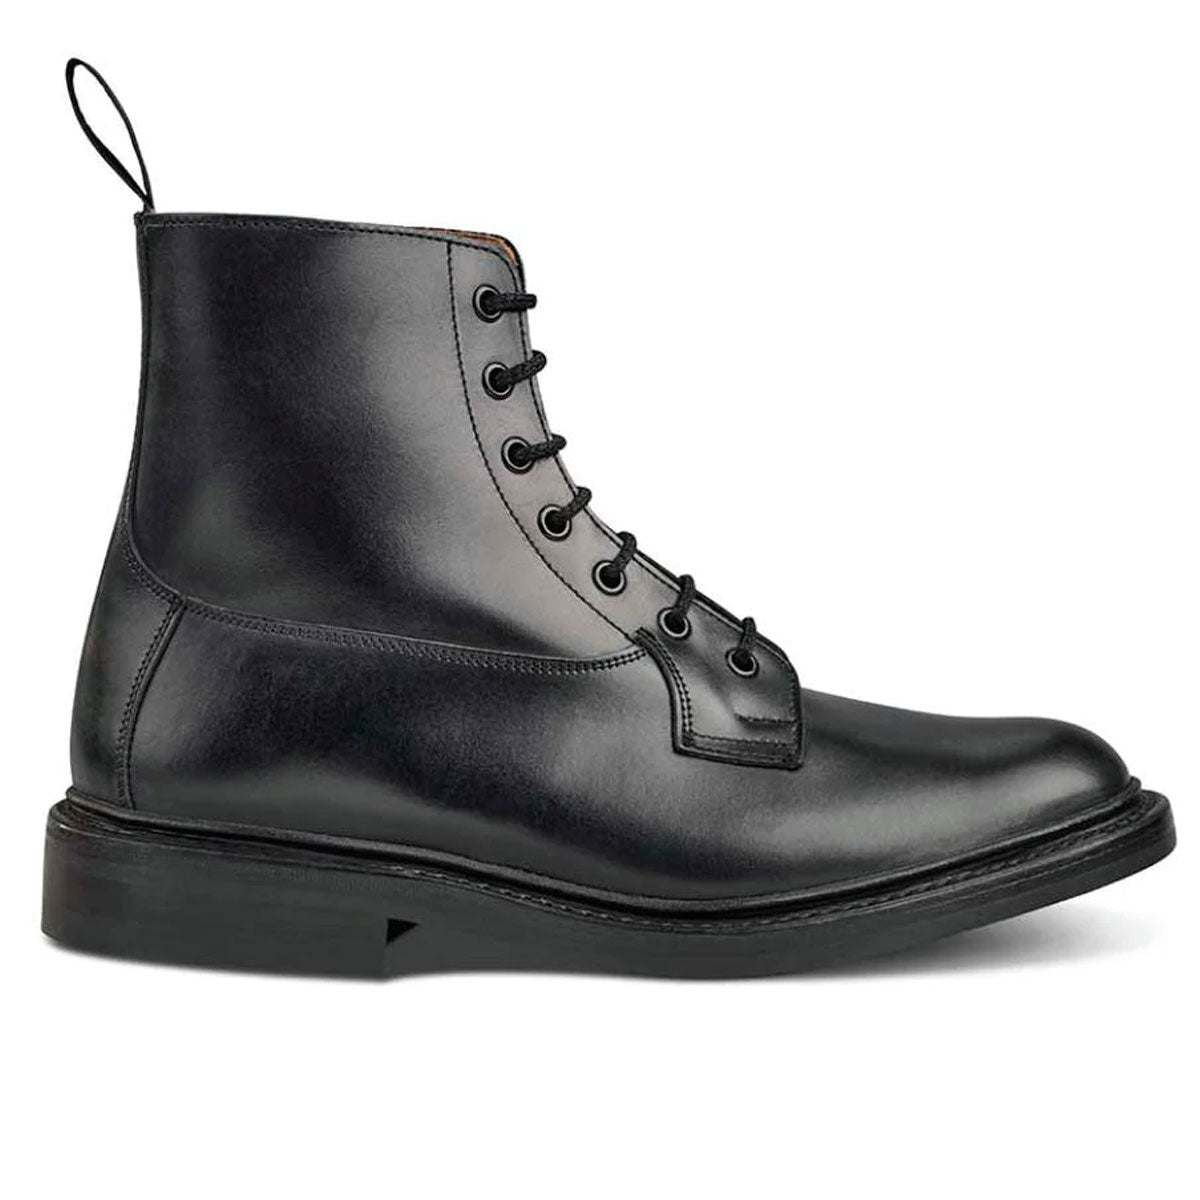 TRICKER'S Burford Boots - Mens Dainite or Leather Sole - Black Calf